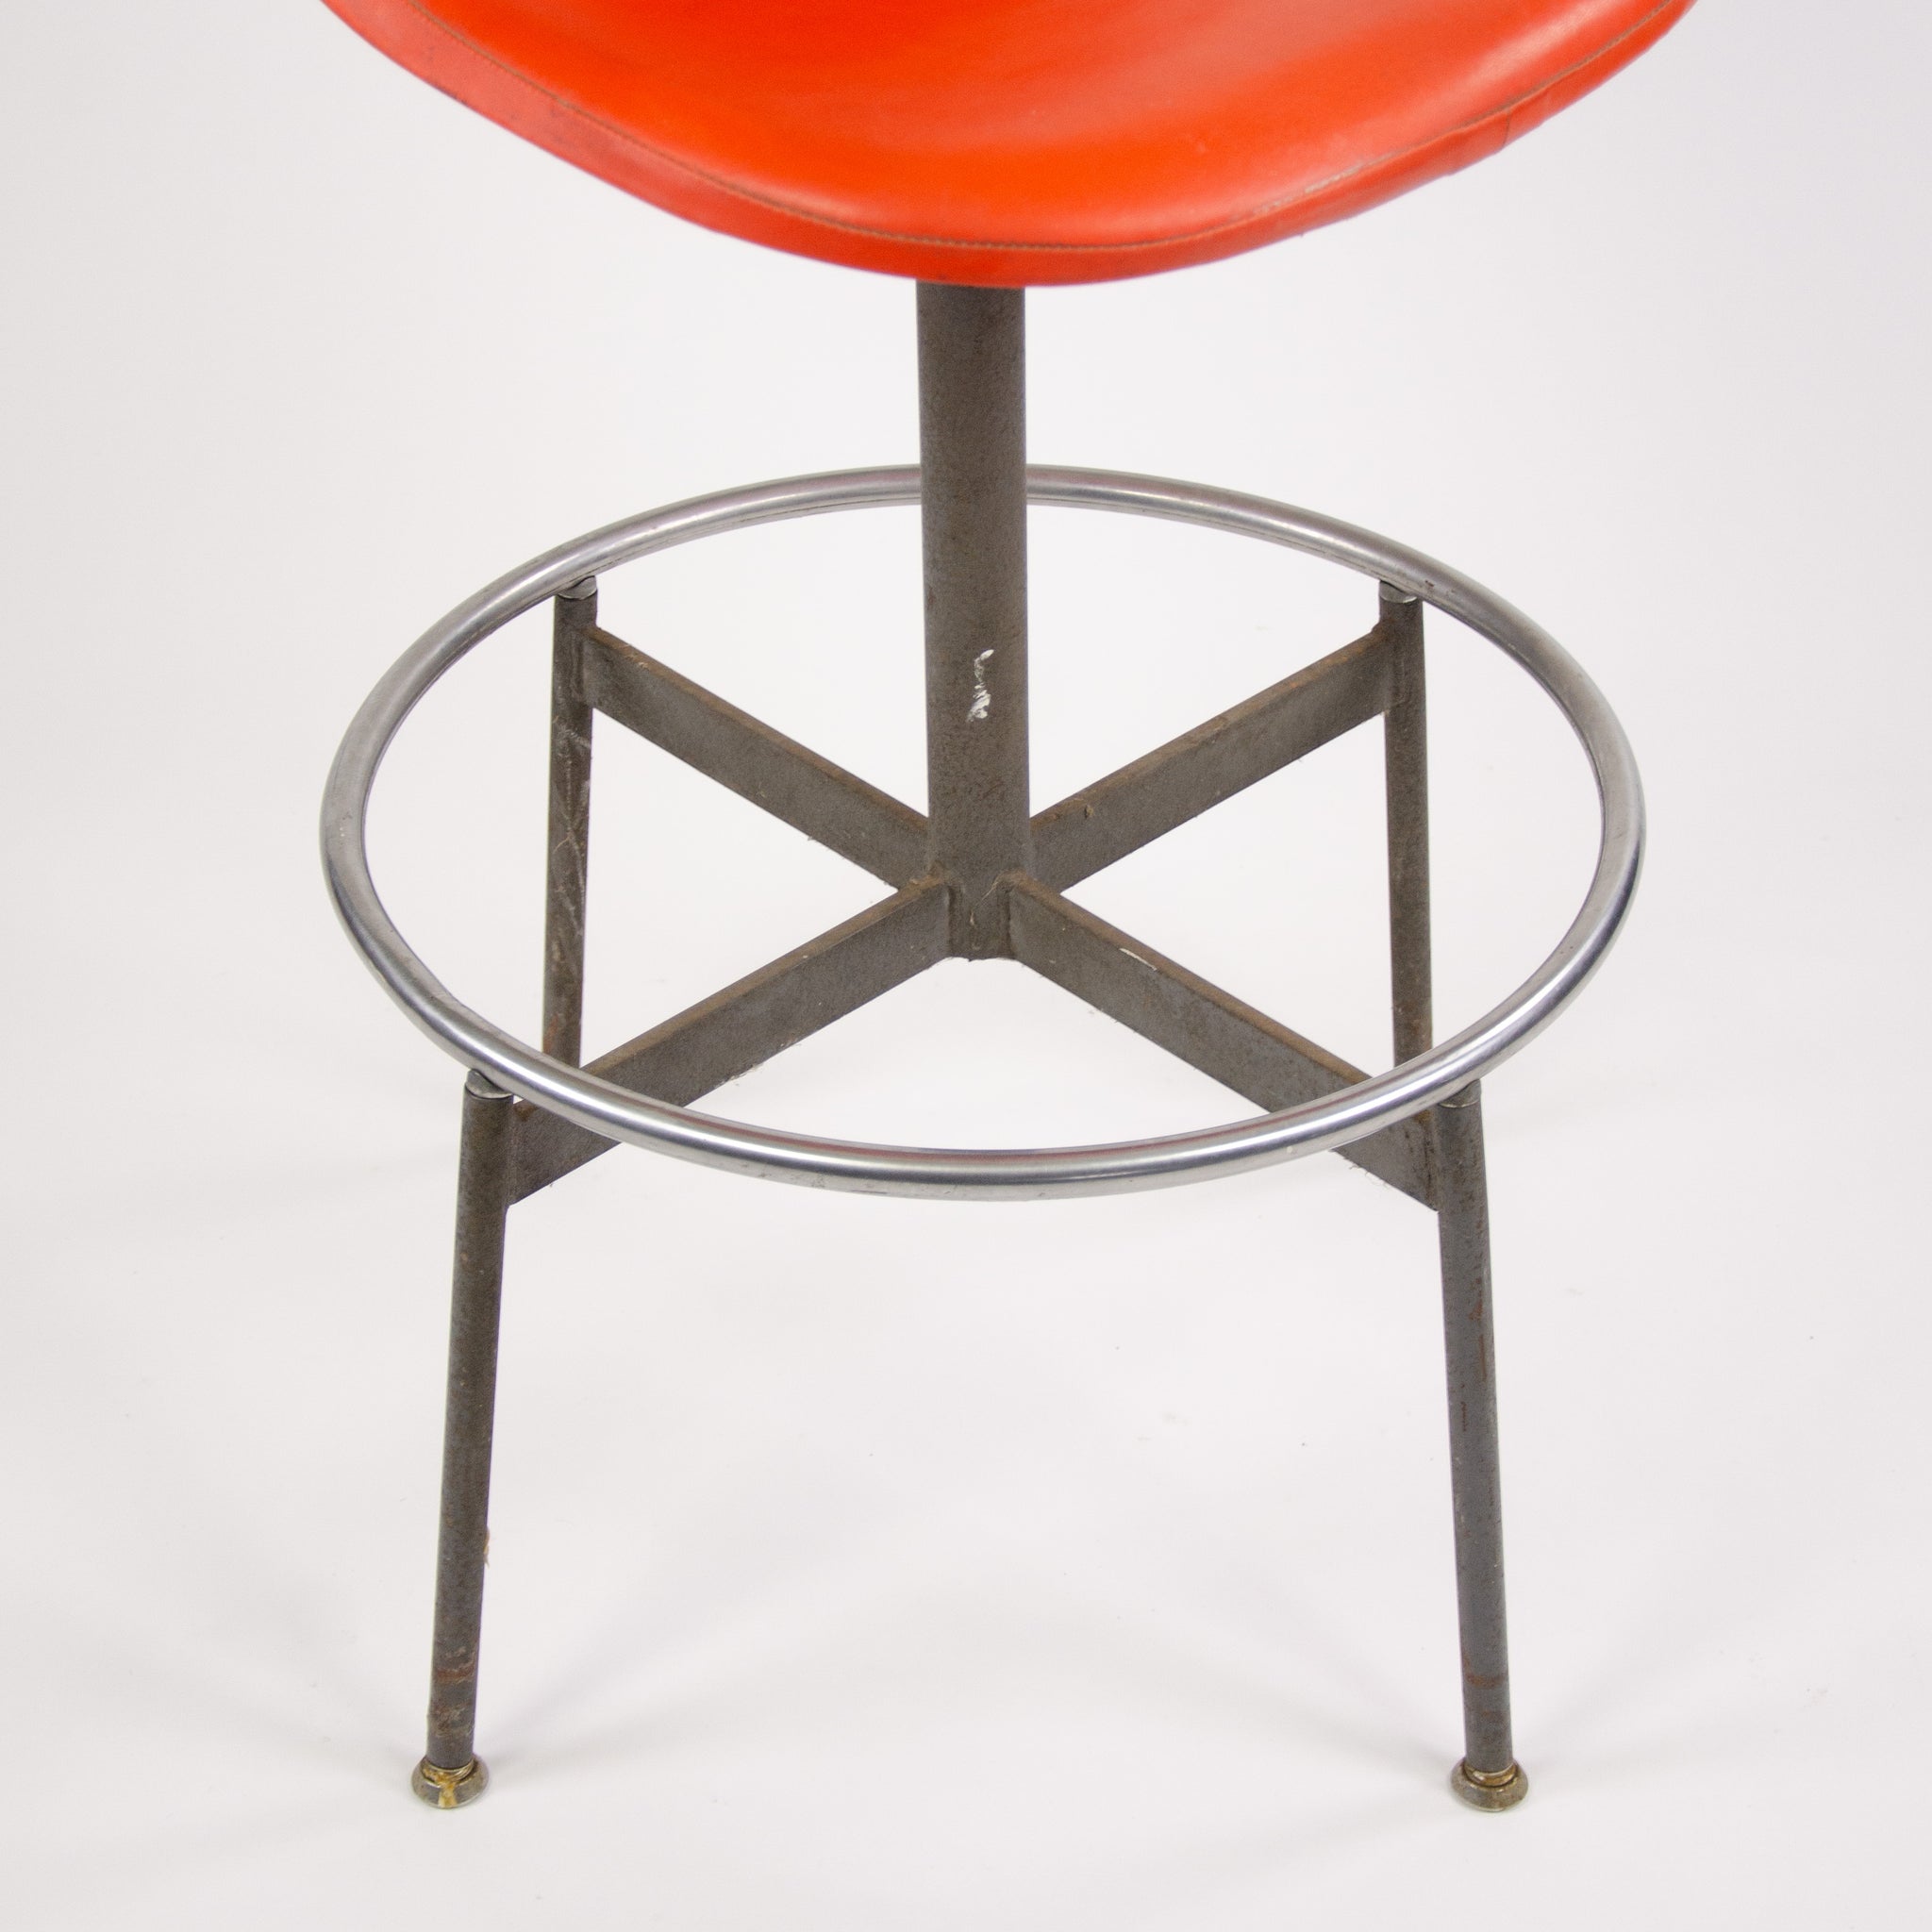 SOLD Herman Miller Eames Fiberglass Drafting Side Shell Chair Late 1950's